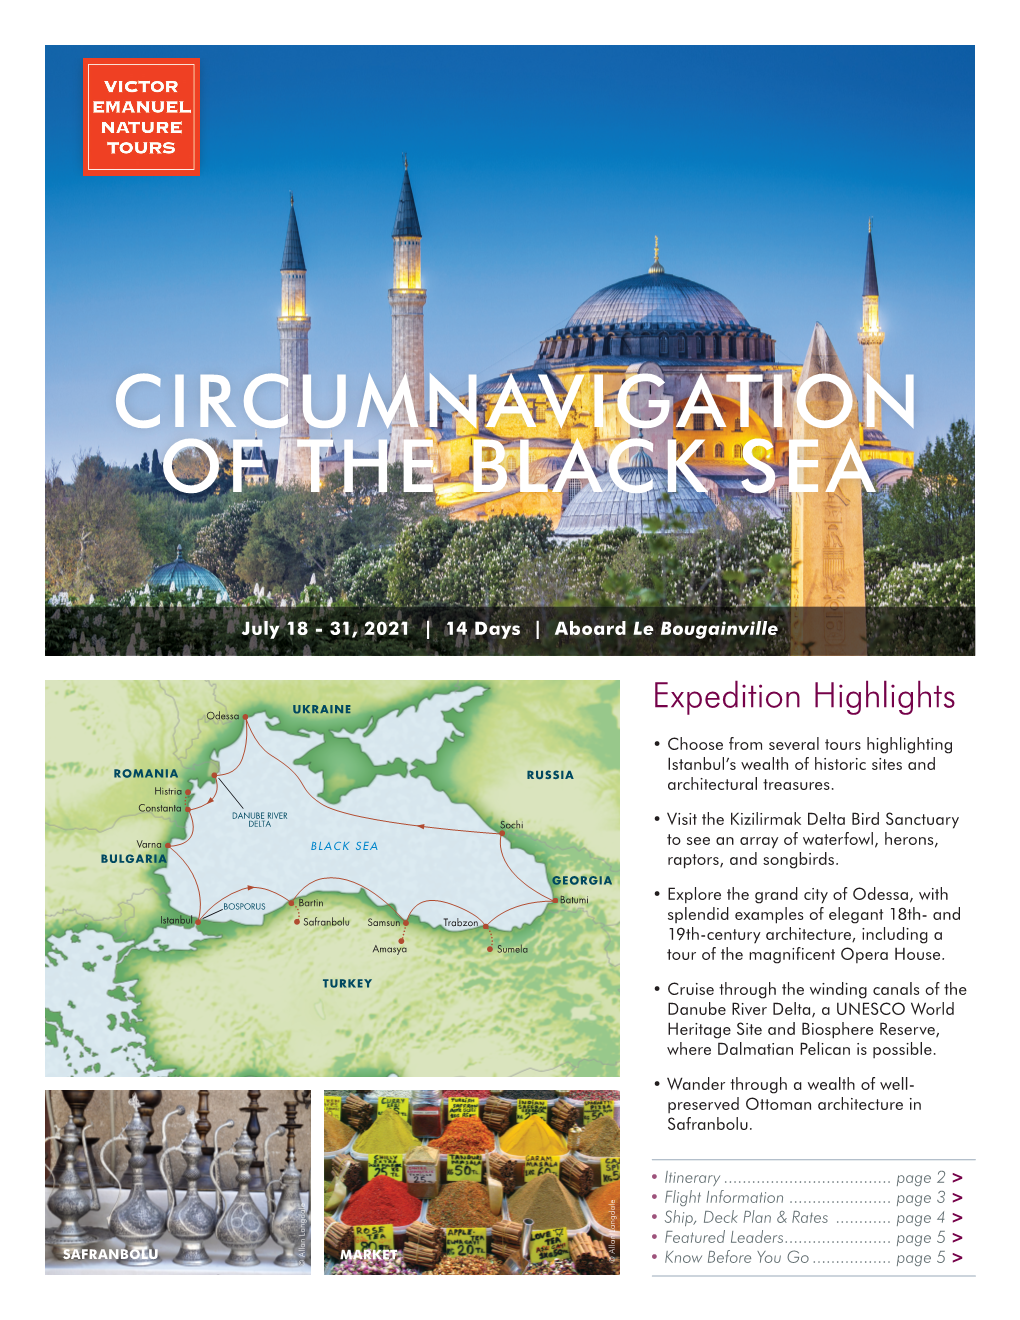 Circumnavigation of the Black Sea